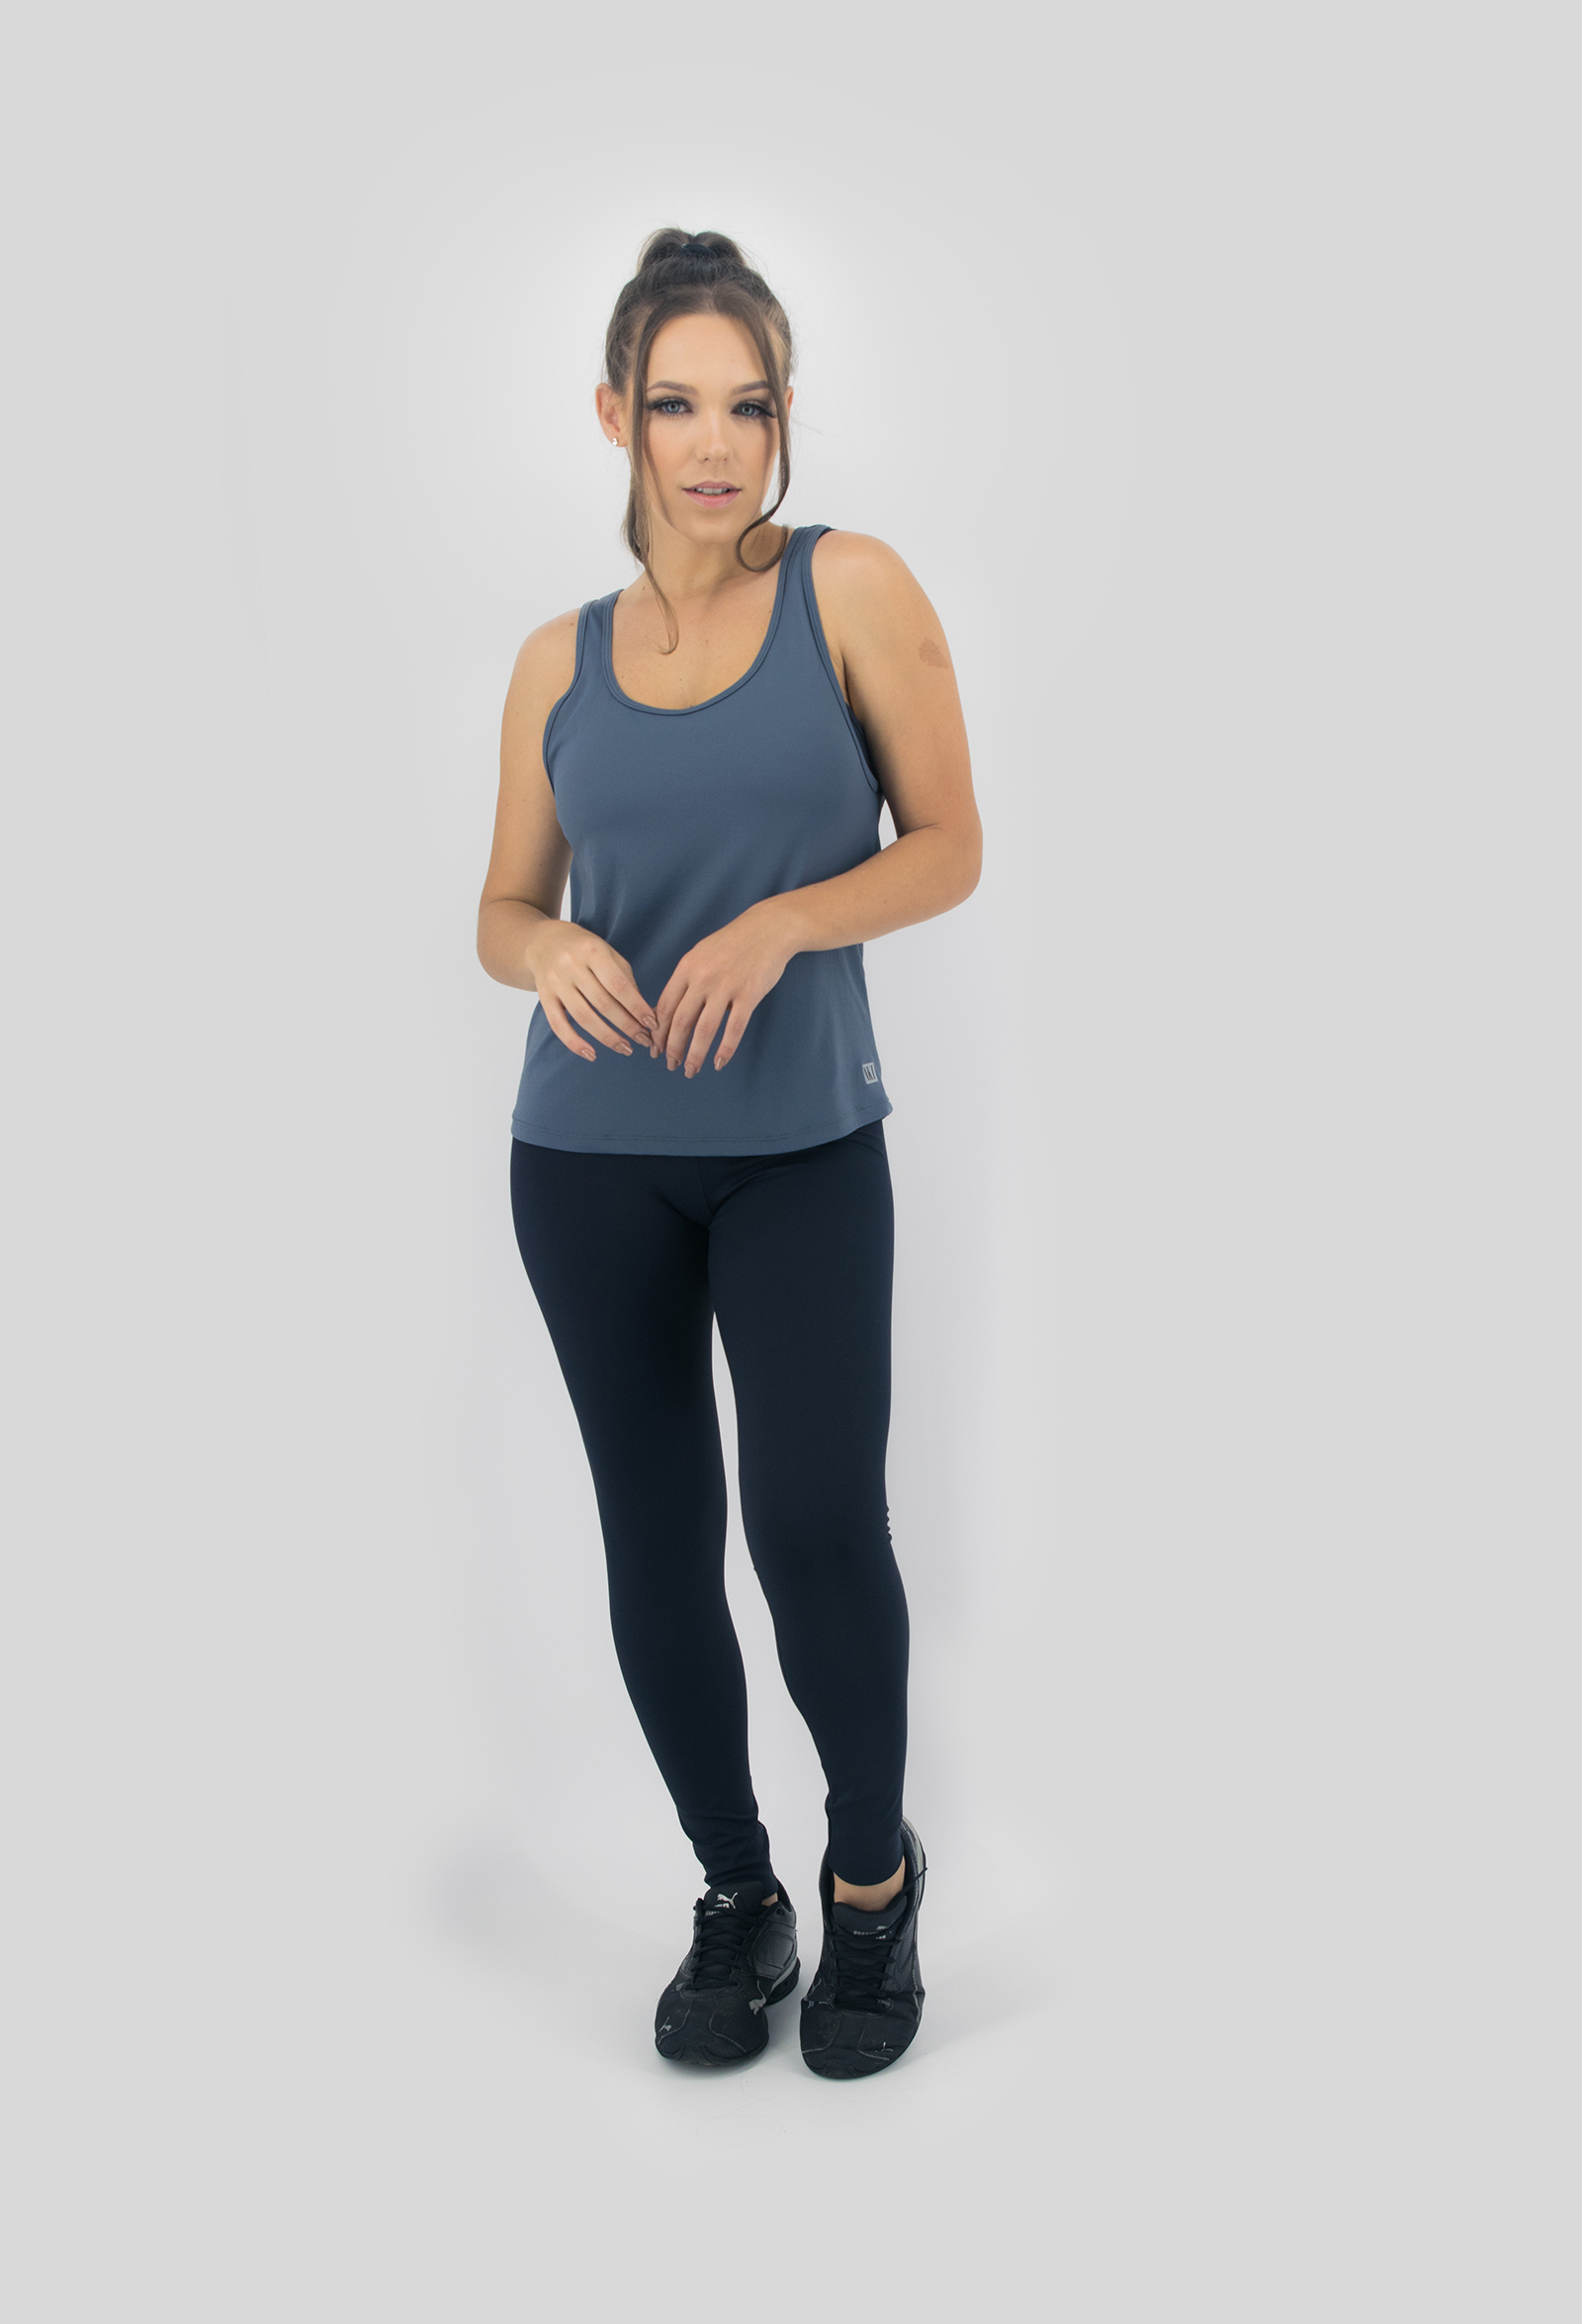 Regata Lux Chumbo, Coleção Move Your Body - NKT Fitwear Moda Fitness